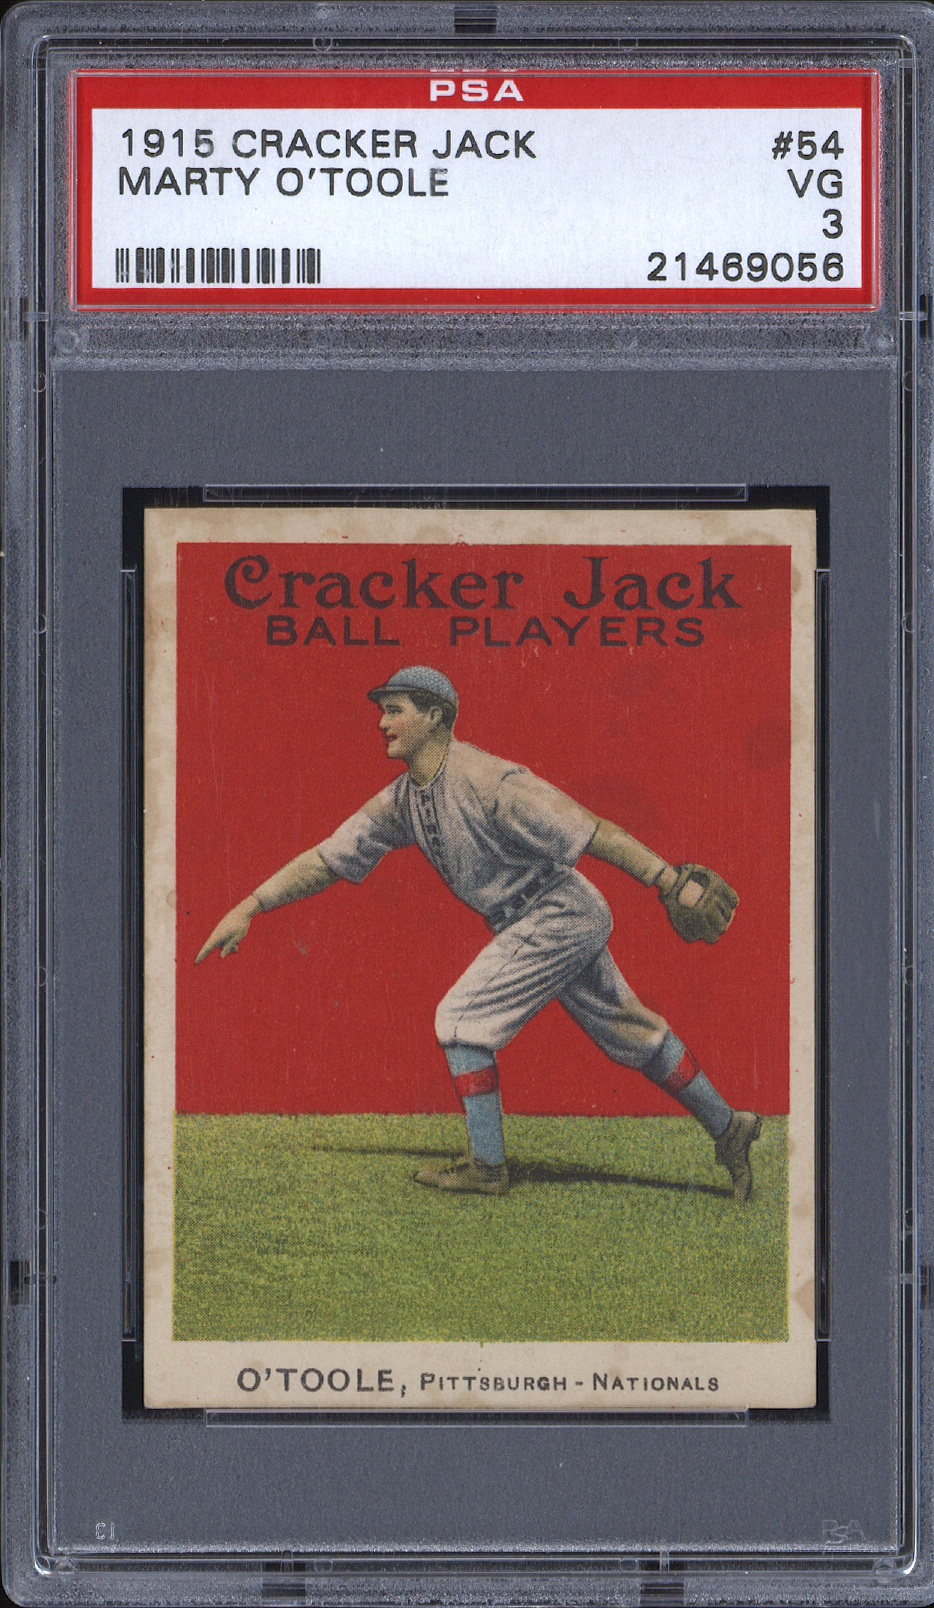  1915 Cracker Jack #54 Marty O'Toole - PSA VG 3